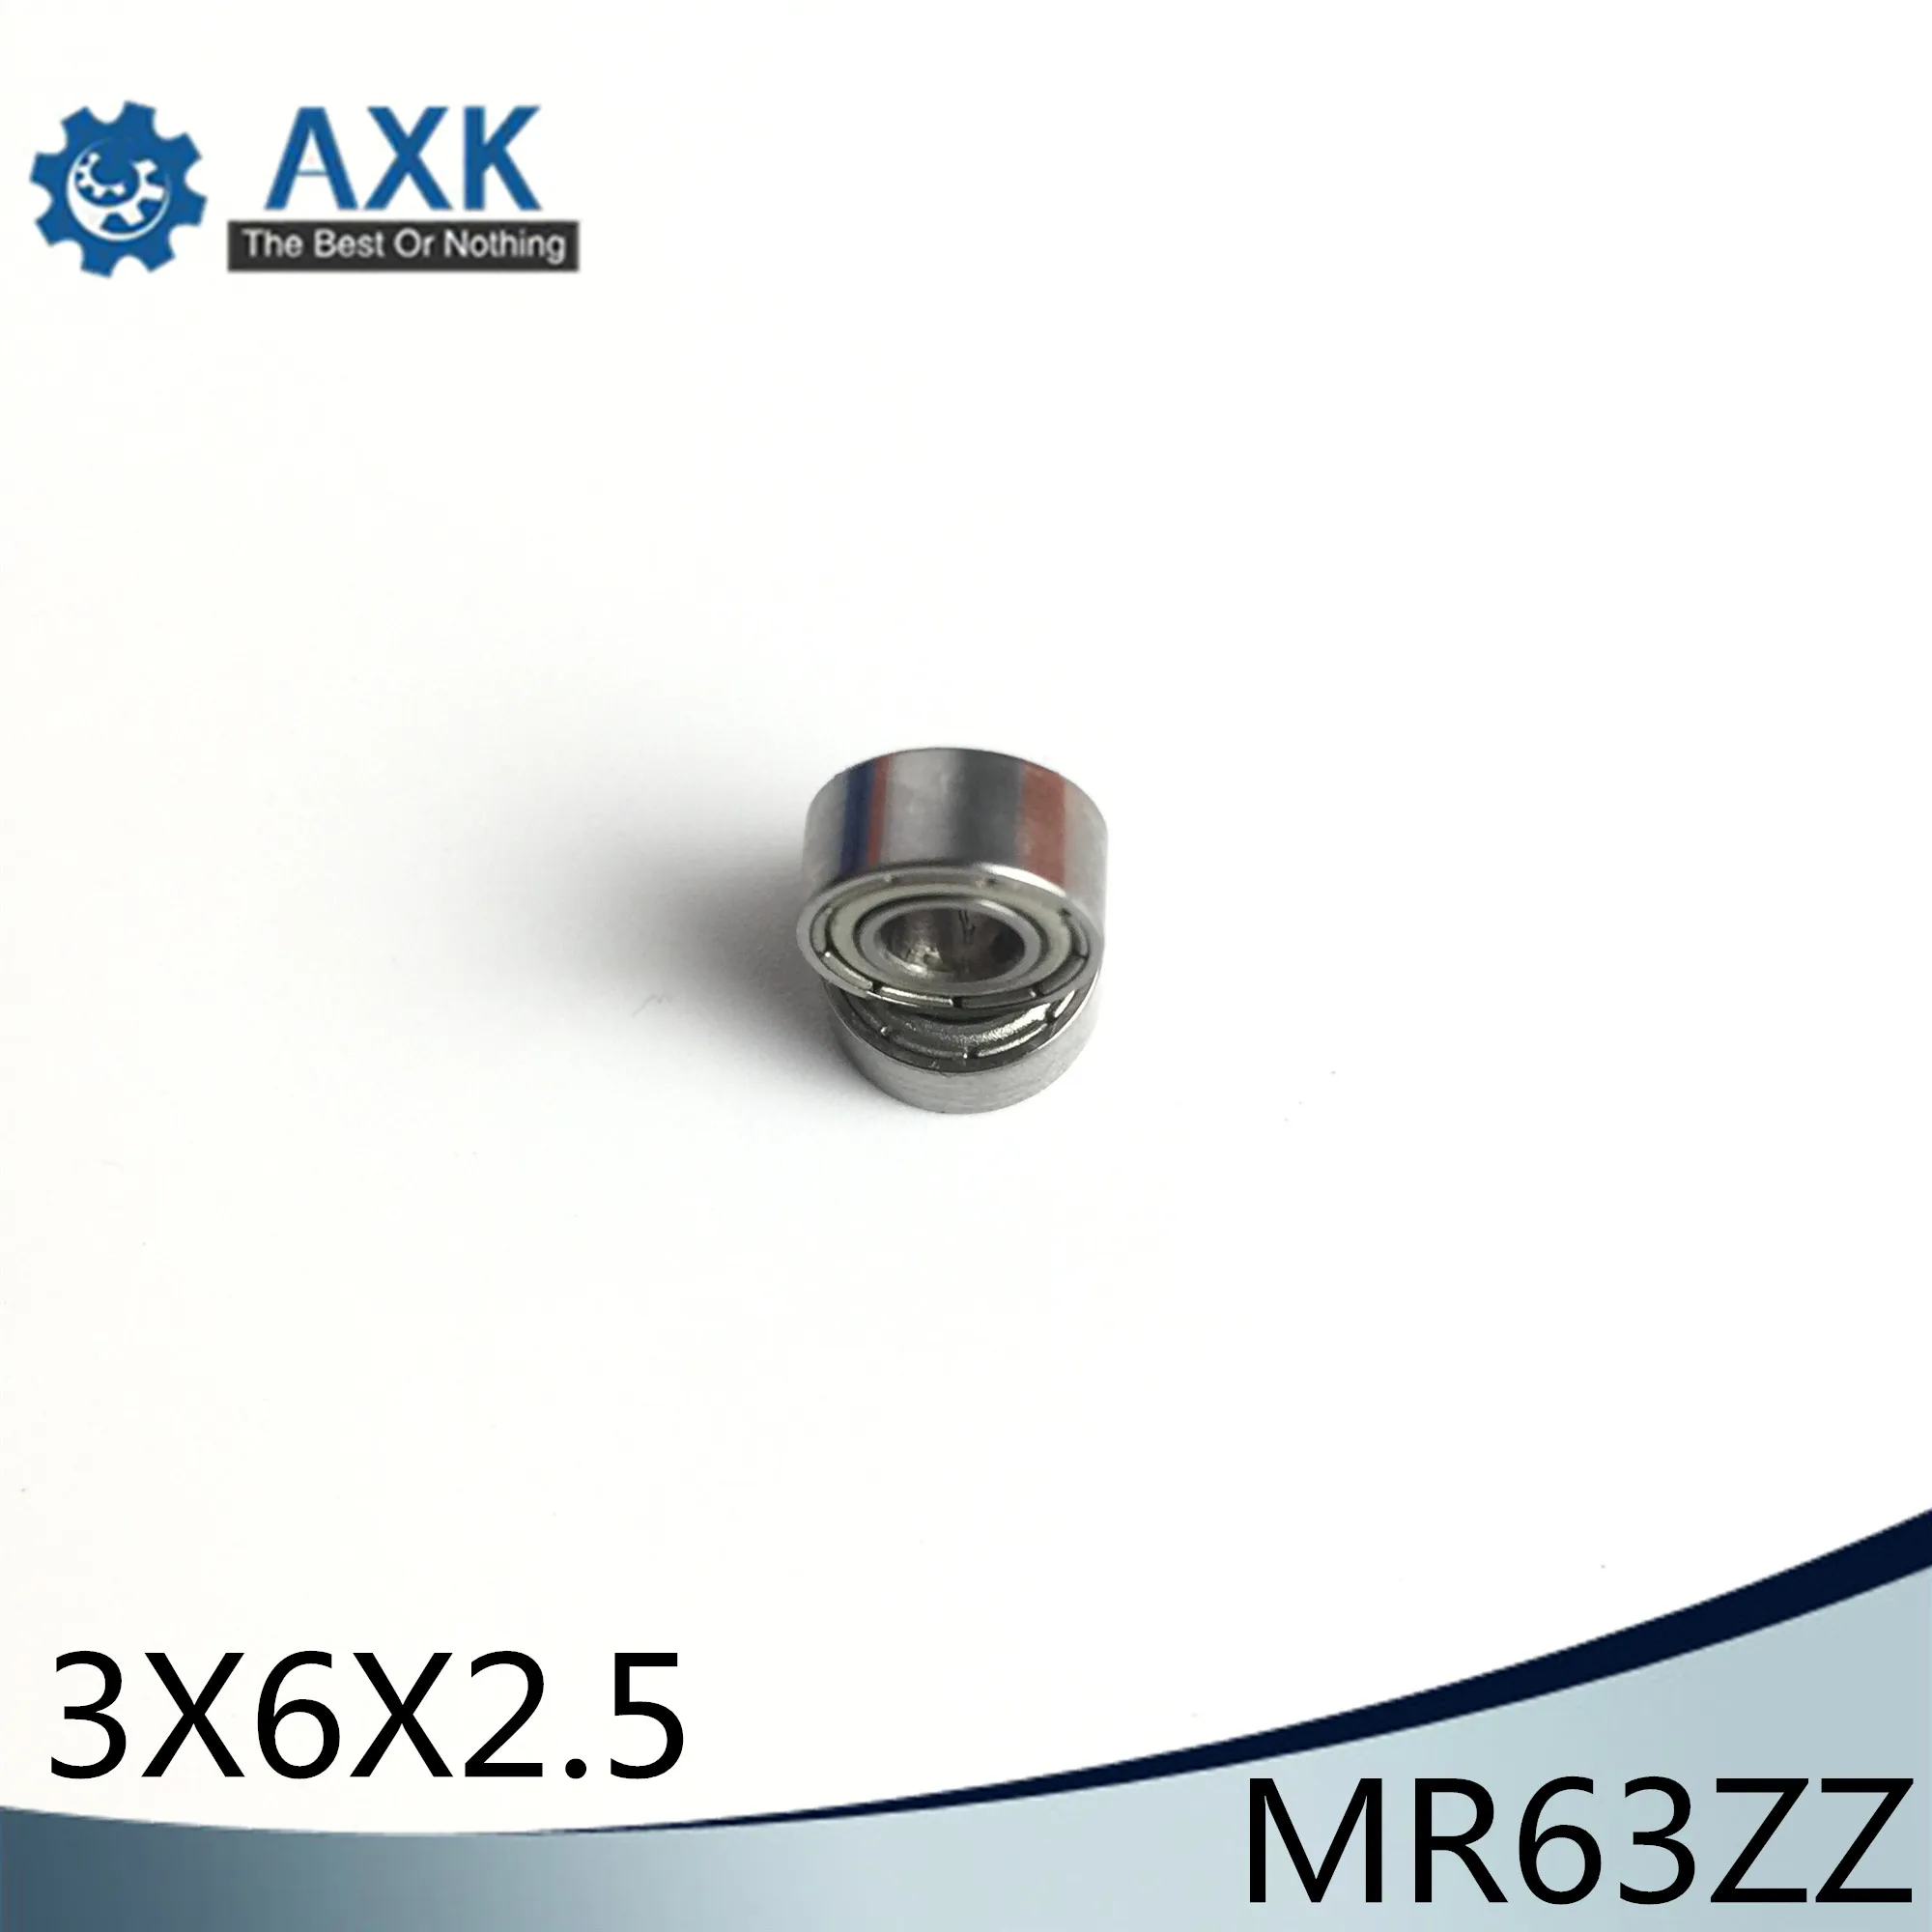 

MR63ZZ Bearing ABEC-1 (10PCS) 3*6*2.5 mm Miniature MR63 ZZ Ball Bearings L630ZZ MR63Z